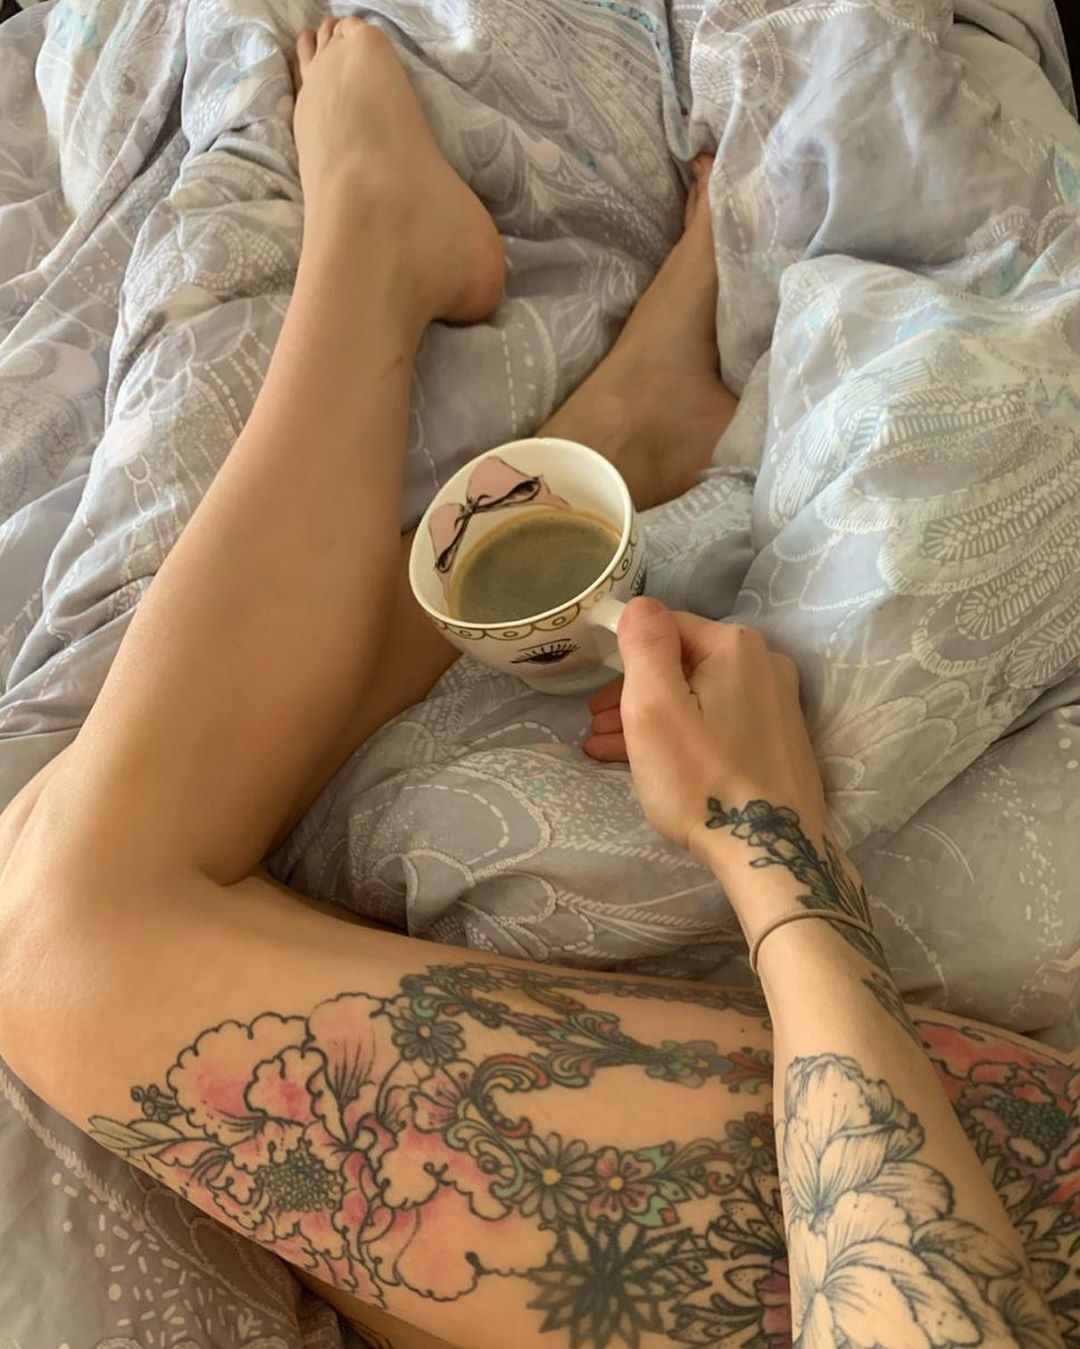 ⠀⠀⠀⠀⠀⠀⠀⠀⠀MASHA TSIGAL - Доброе утро 🌞☕️Чай или кофе ?
#inked #tattoo #morning #tea #coffee #inkedgirls #skin #tattoogirl